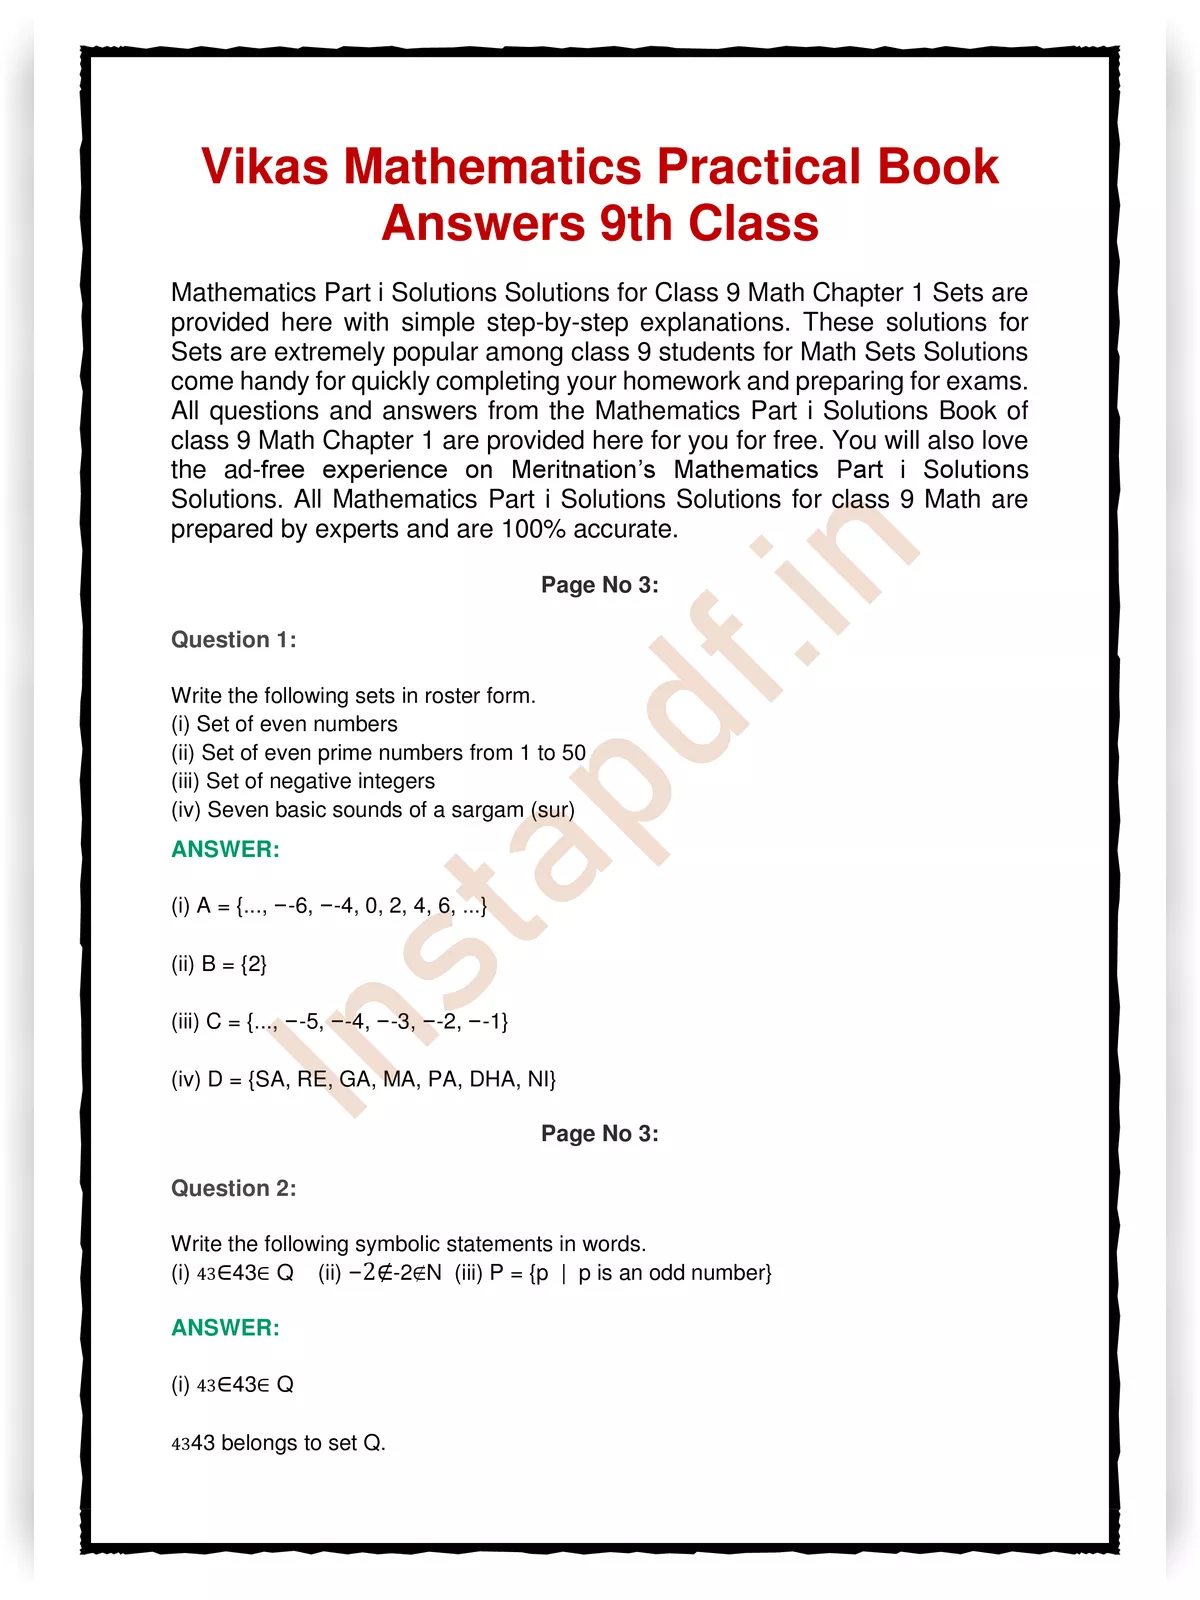 Vikas Mathematics Practical Book Answers 9th Class